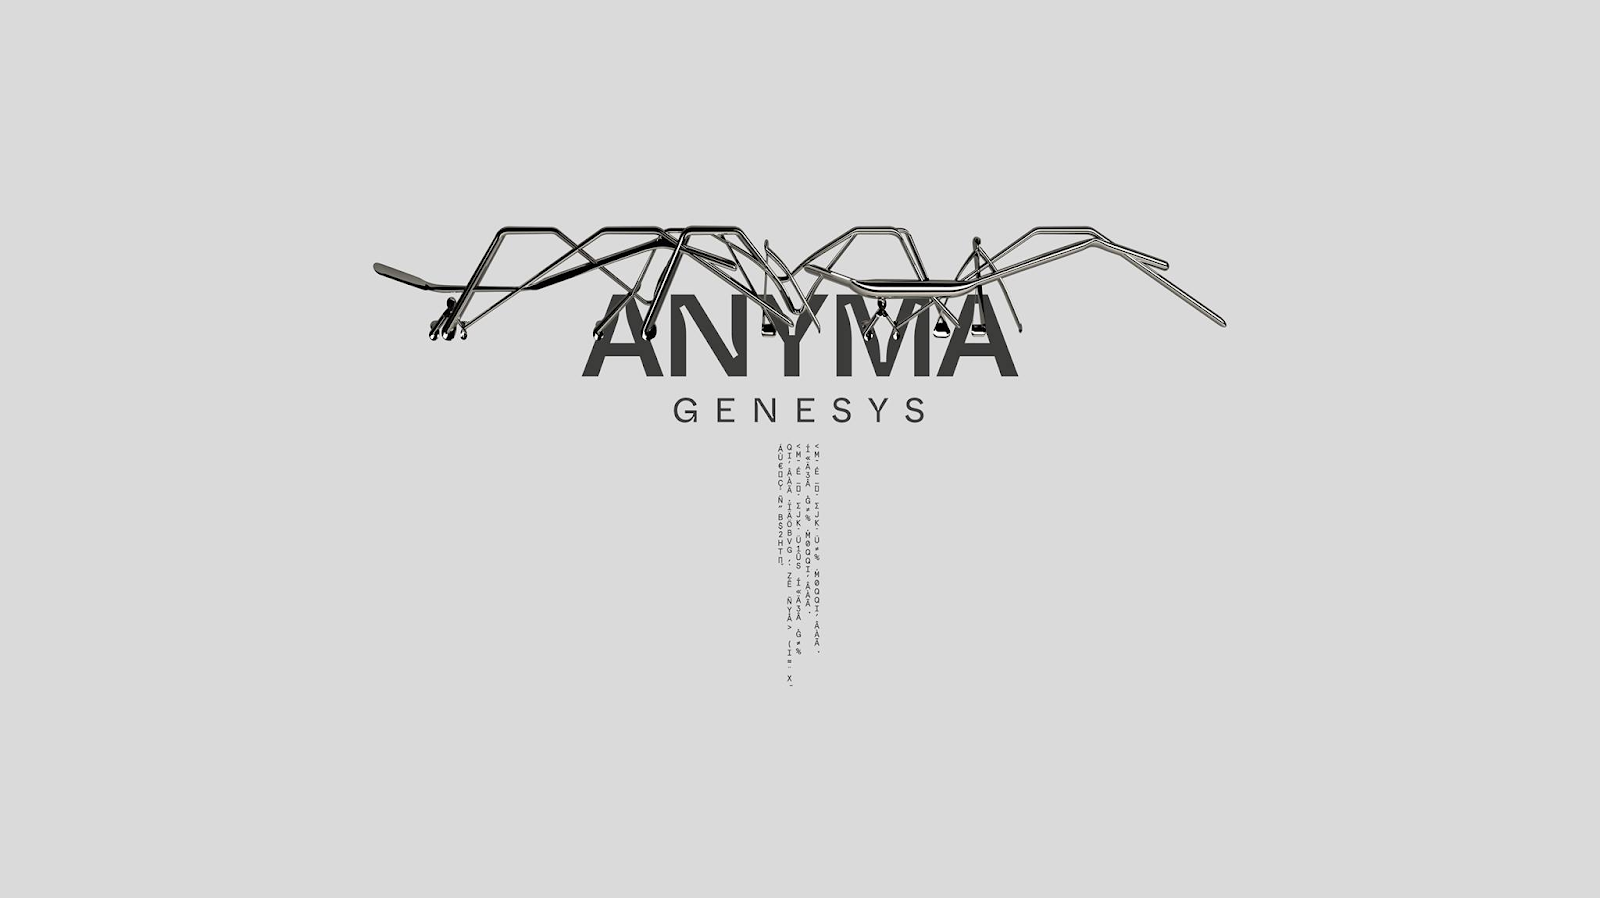 Anyma Genesys cover art via Facebook